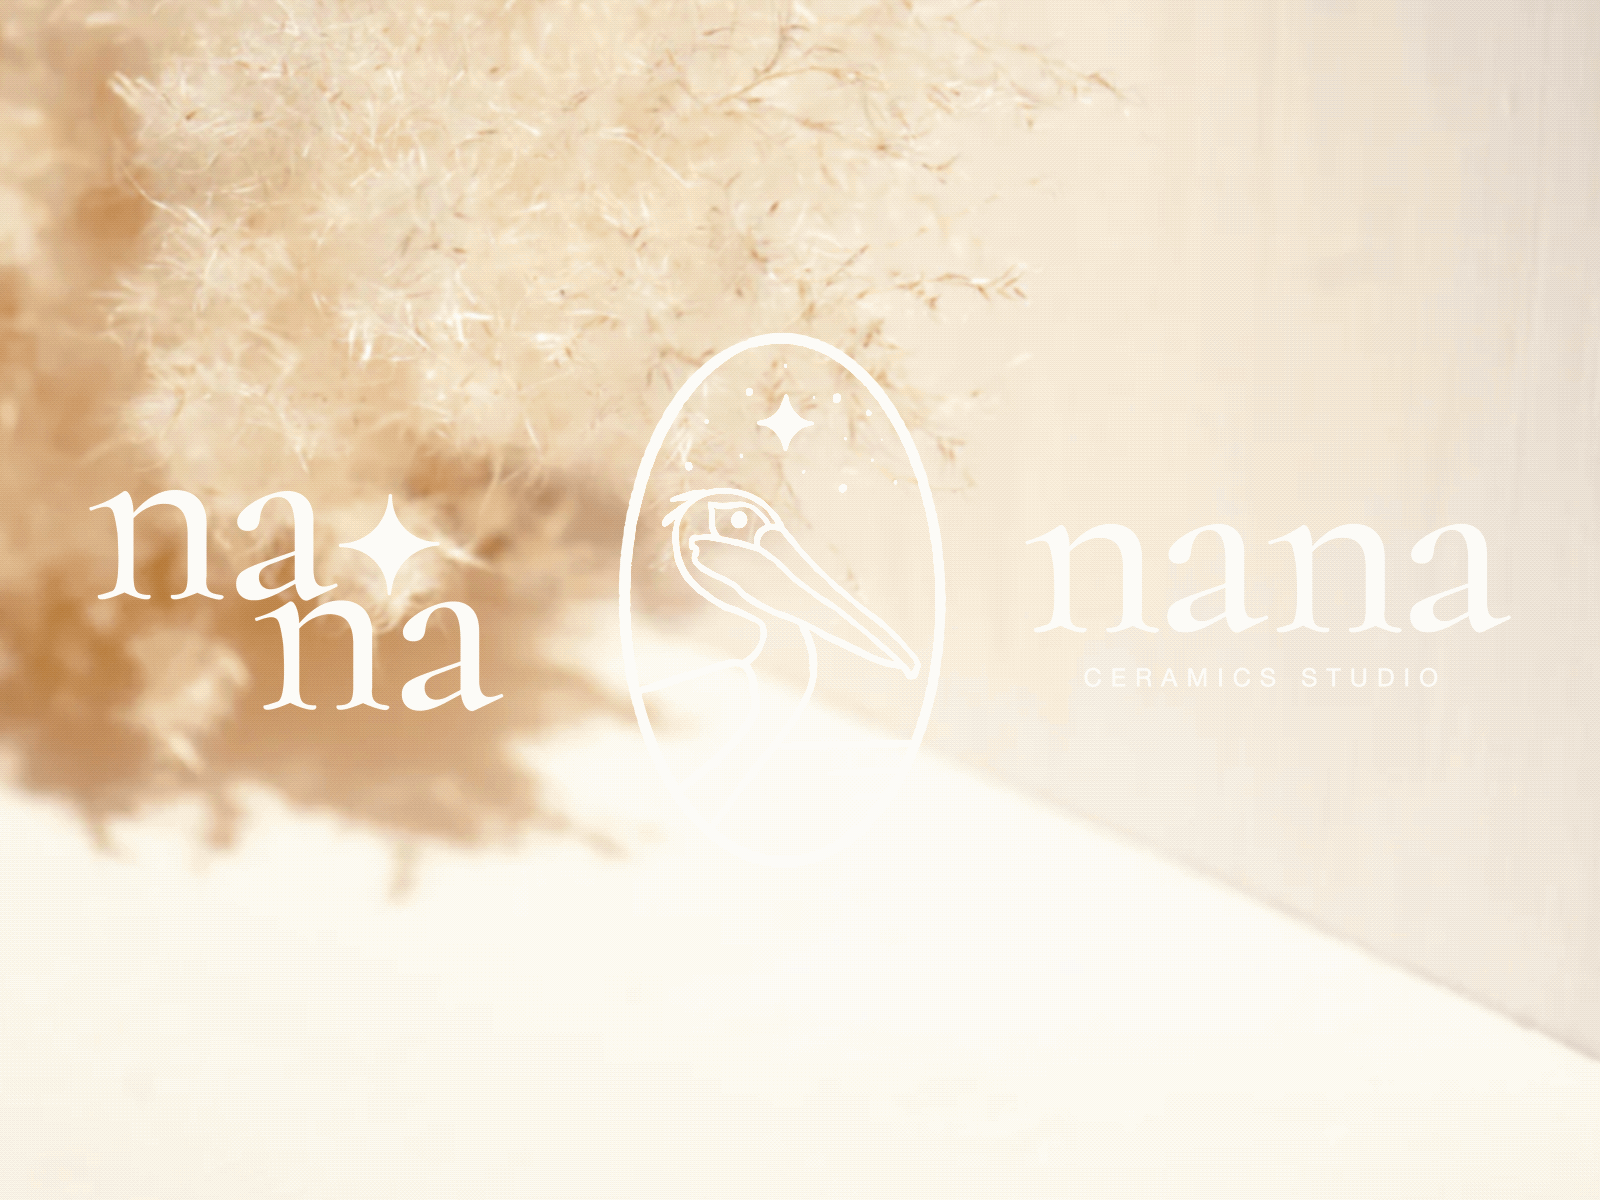 Nana Ceramics Studio